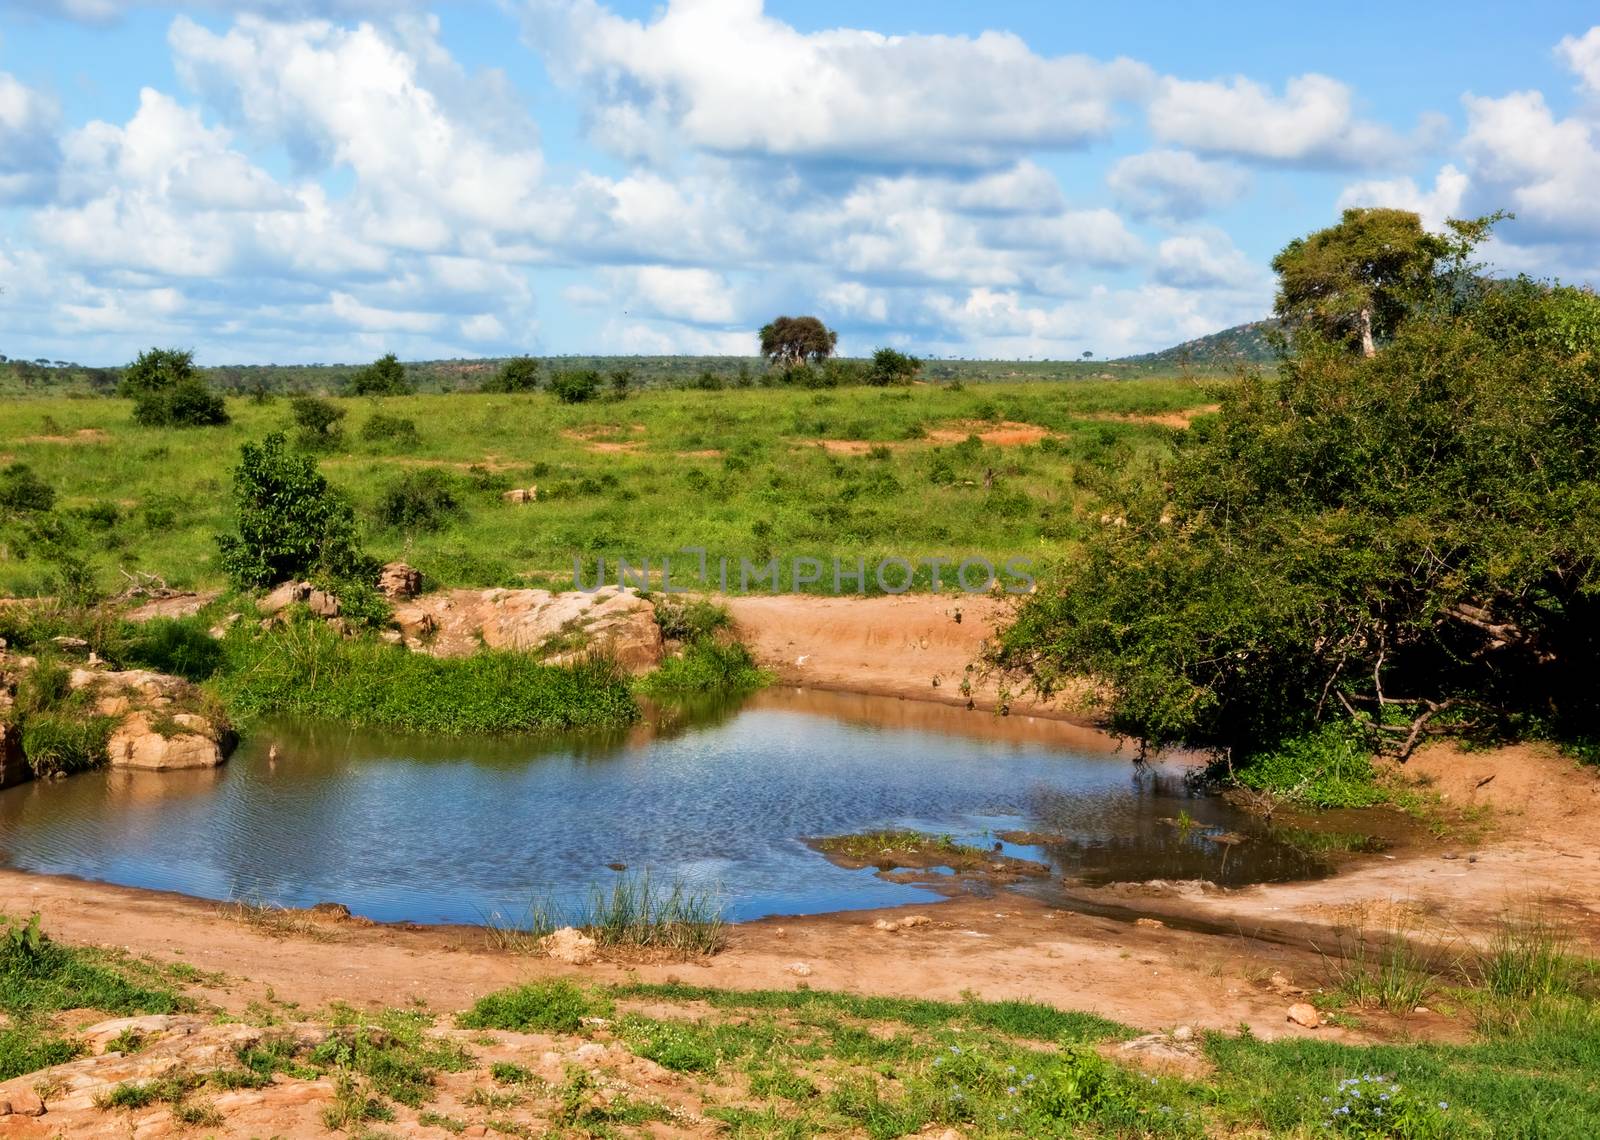 Pond of clear water in bush on savanna in Africa. Landscape of Tsavo West, Kenya.